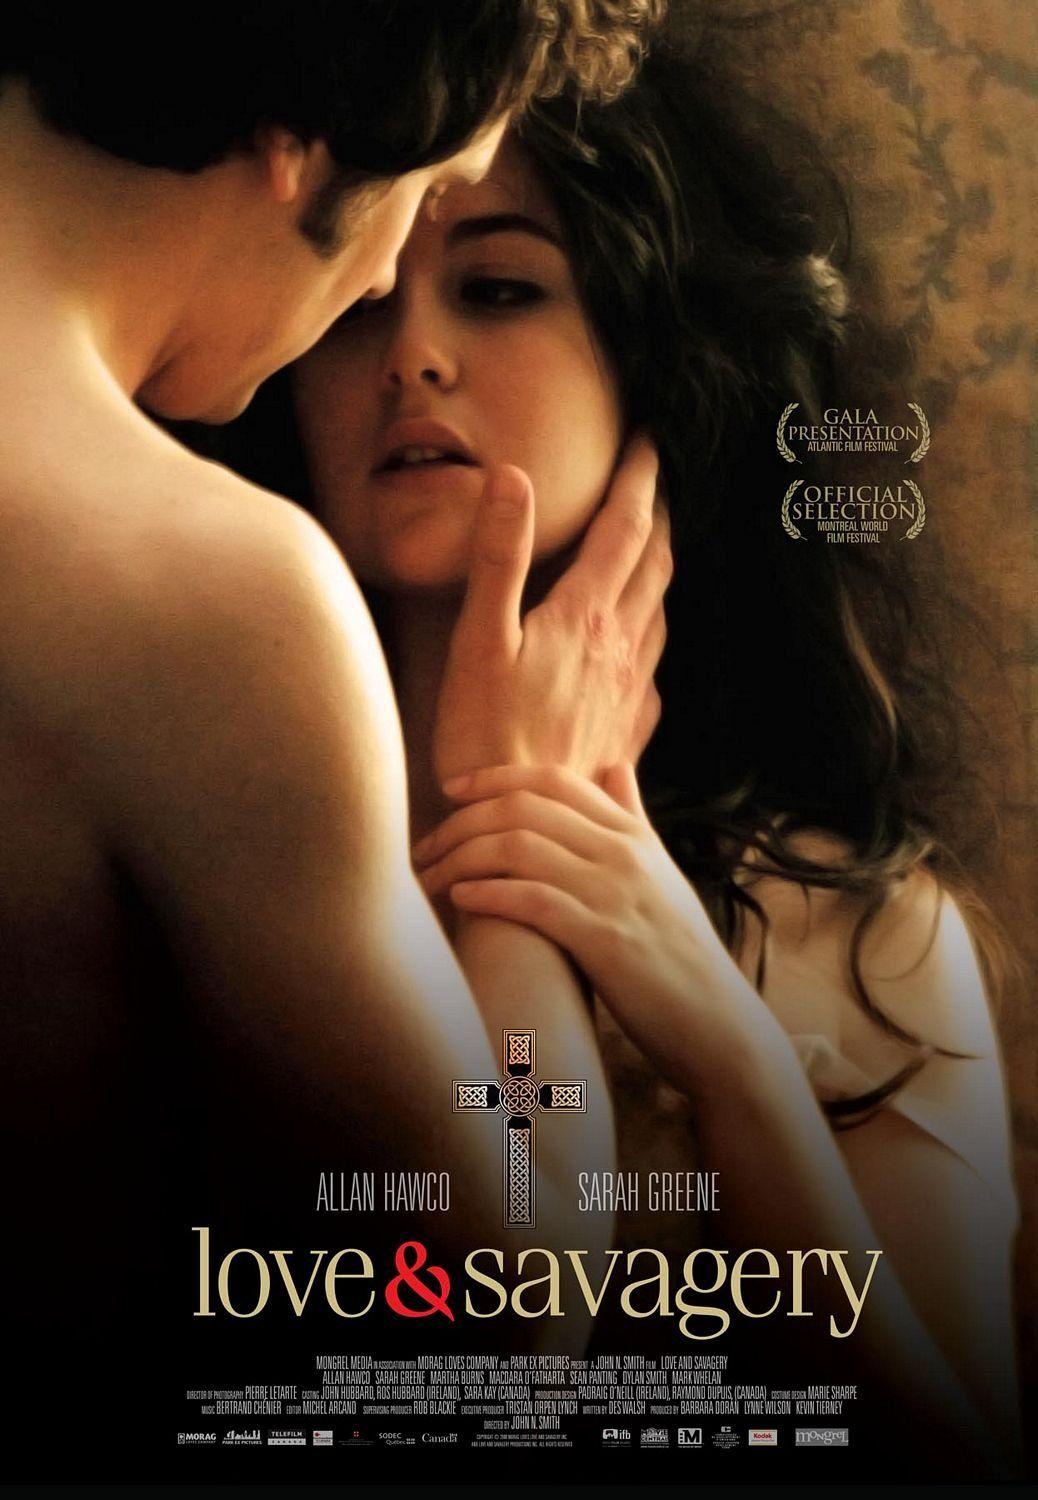 lego movie having sex